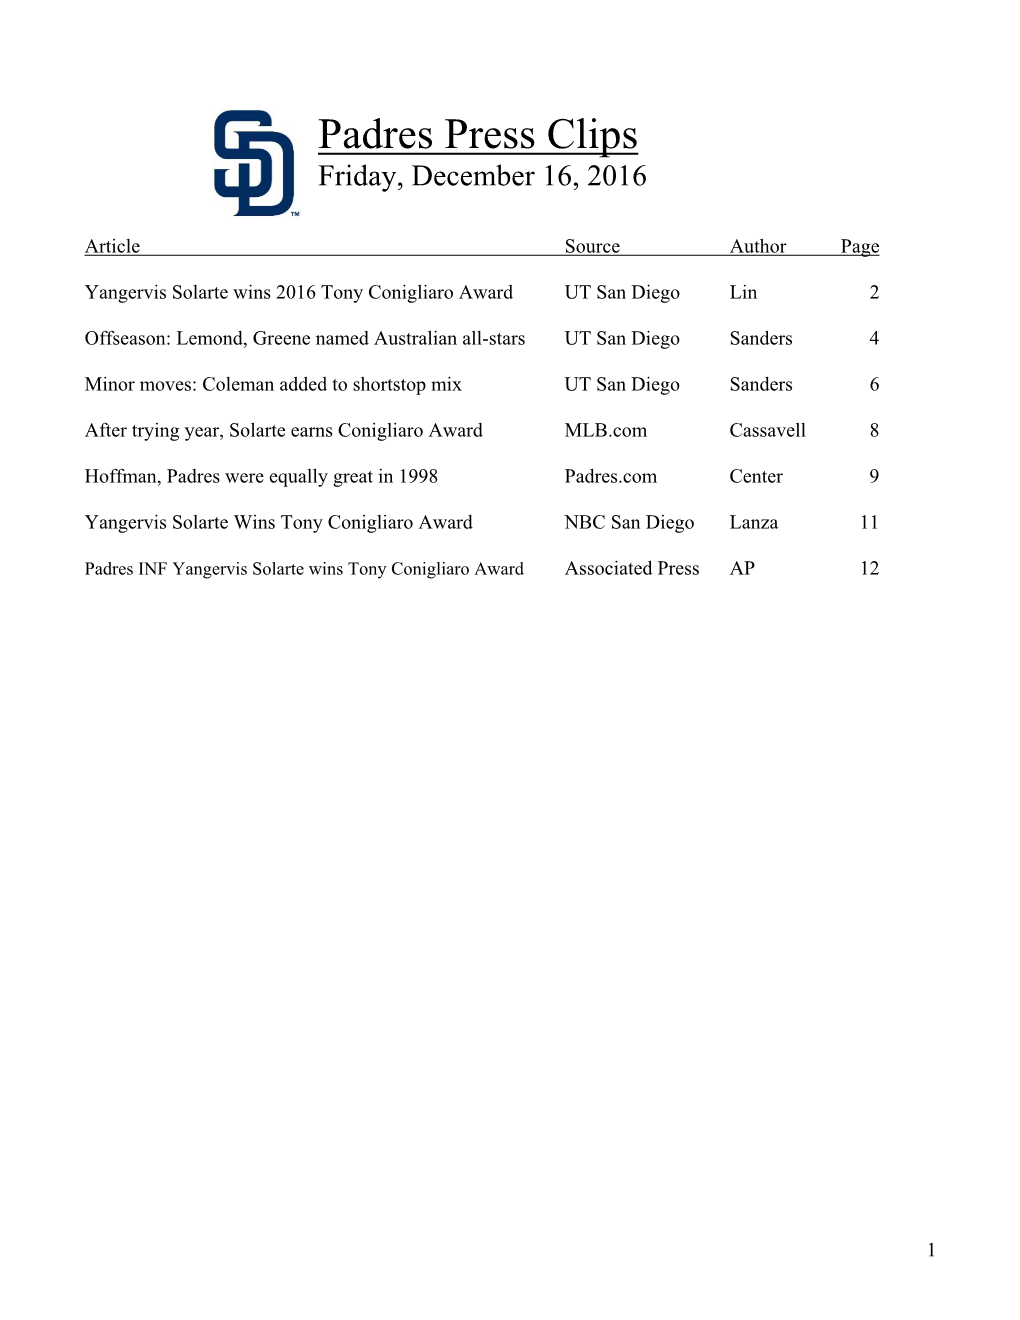 Padres Press Clips Friday, December 16, 2016